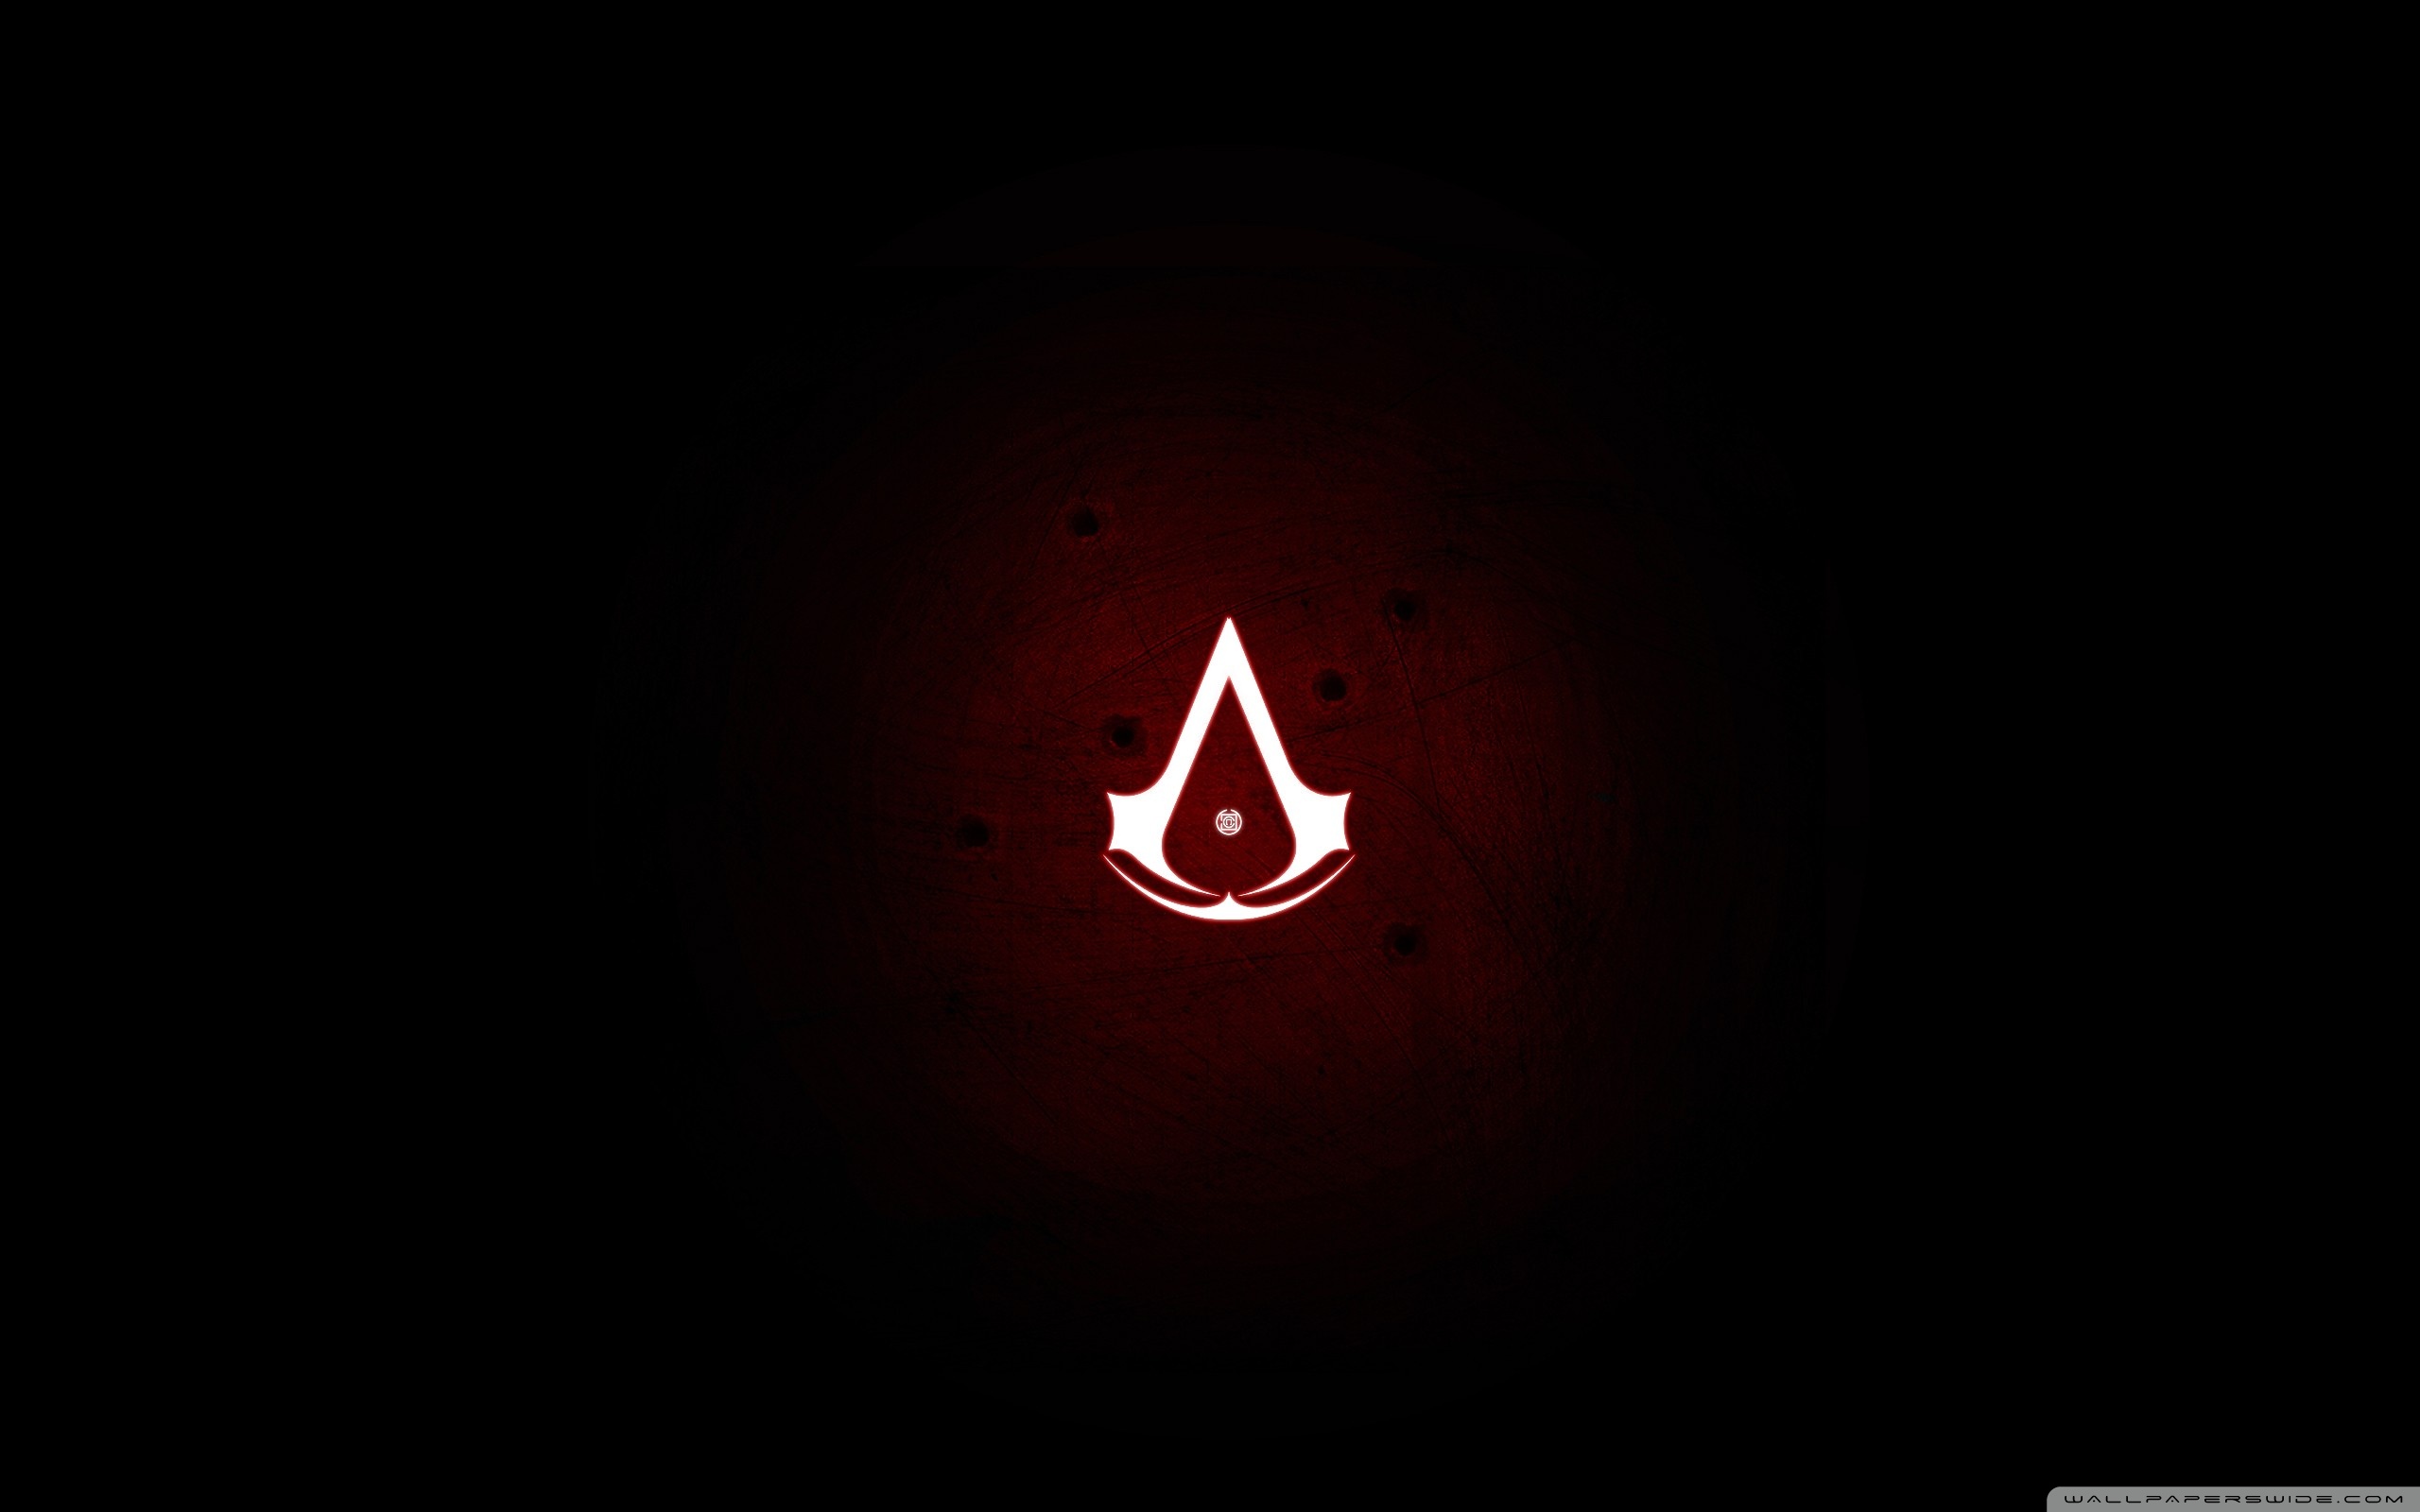 Assassin's Creed Logo Wallpaper Hd 1080p - HD Wallpaper 